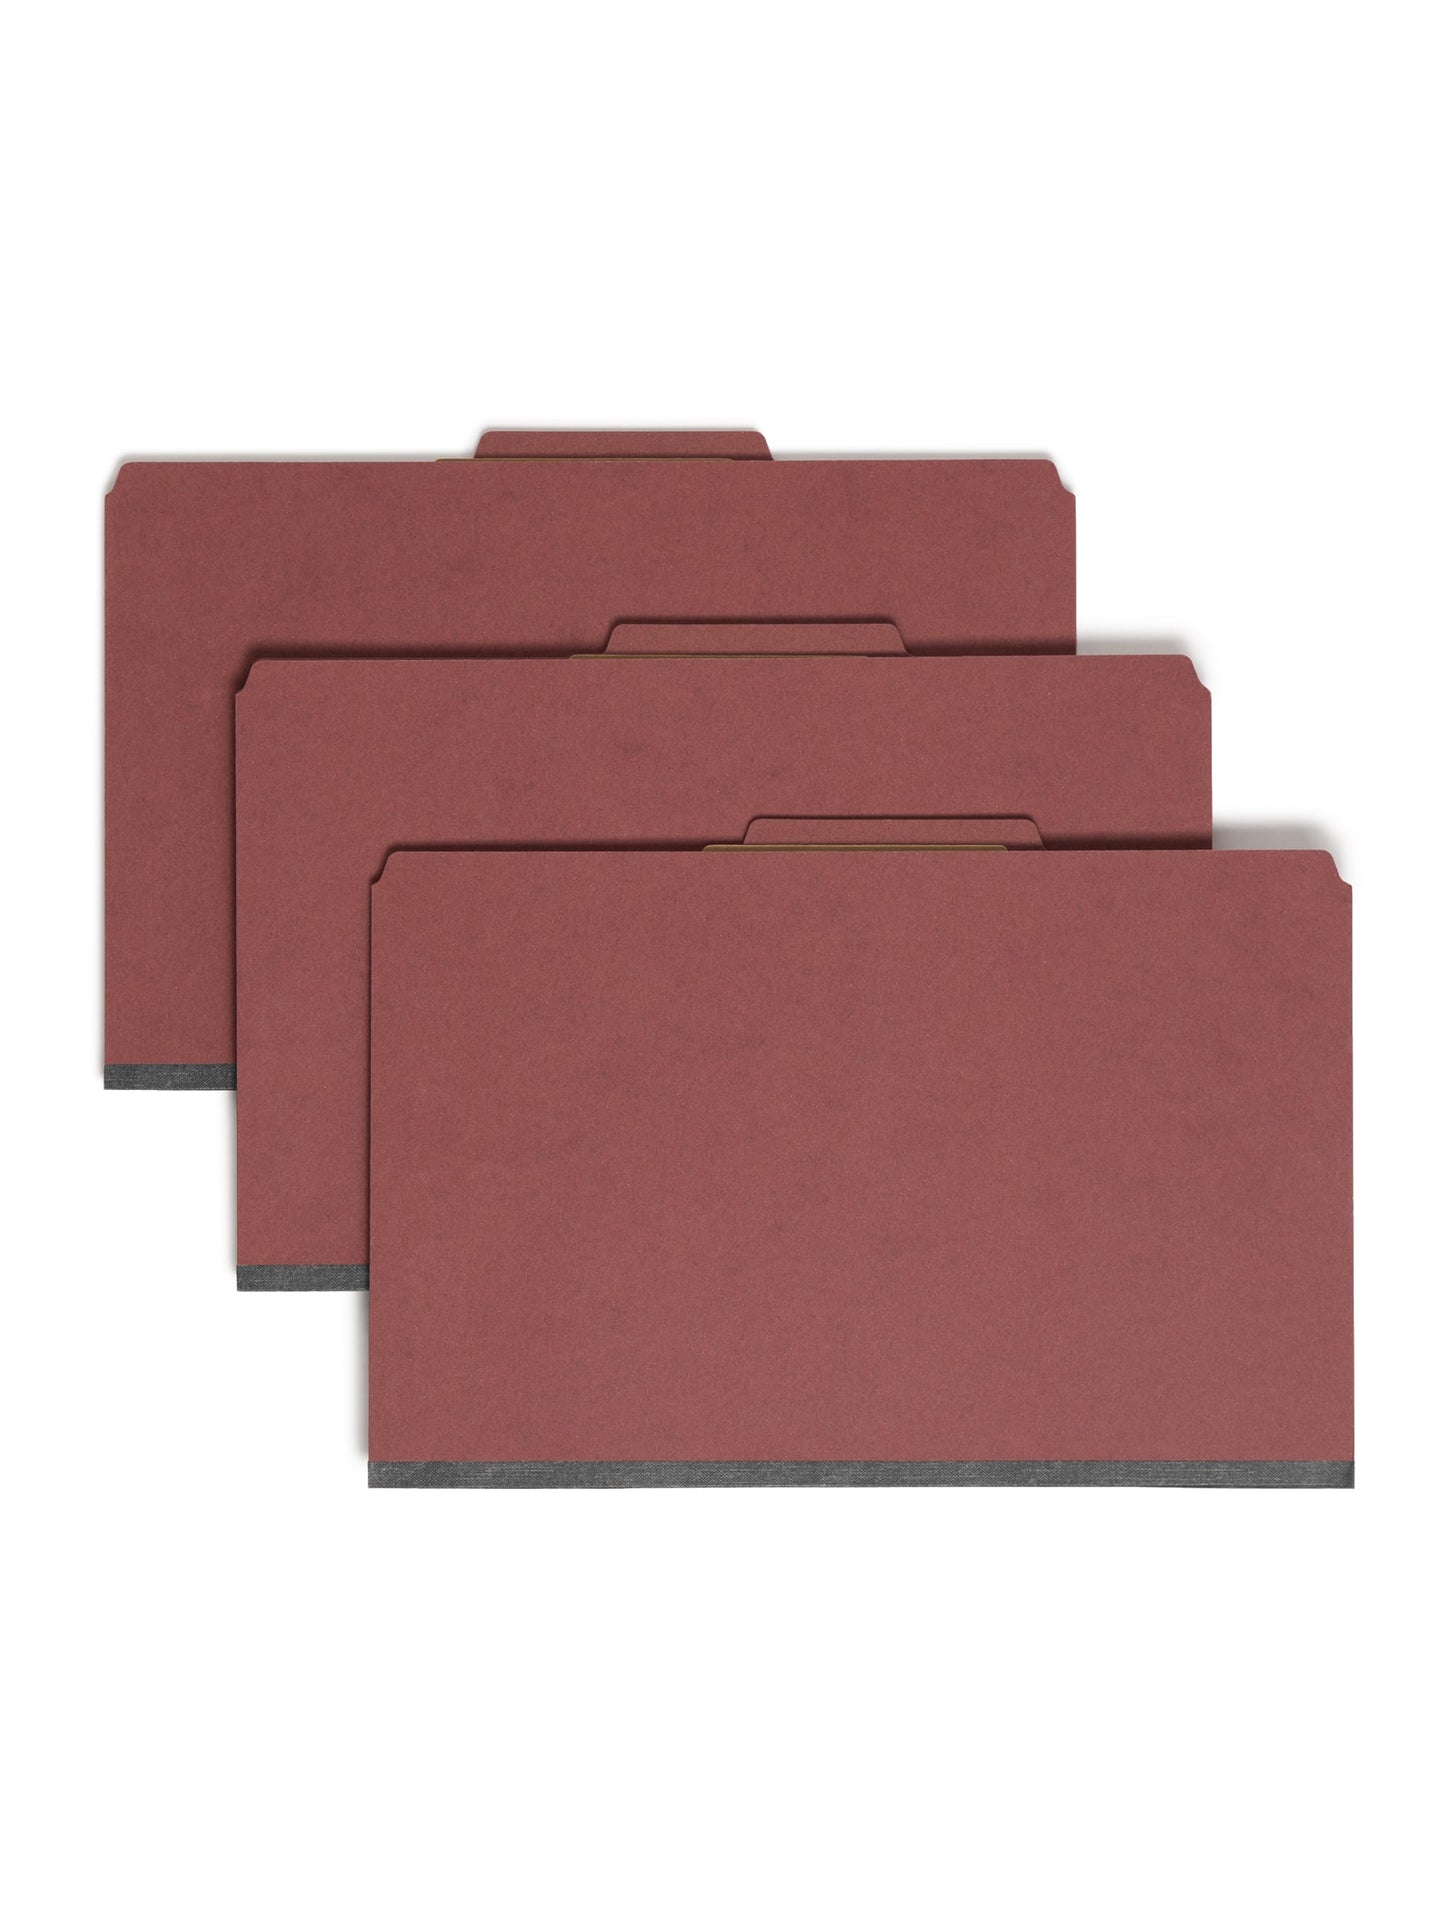 SafeSHIELD® Pressboard Classification File Folders, 1 Divider, 2 inch Expansion, Red Color, Legal Size, Set of 0, 30086486187757